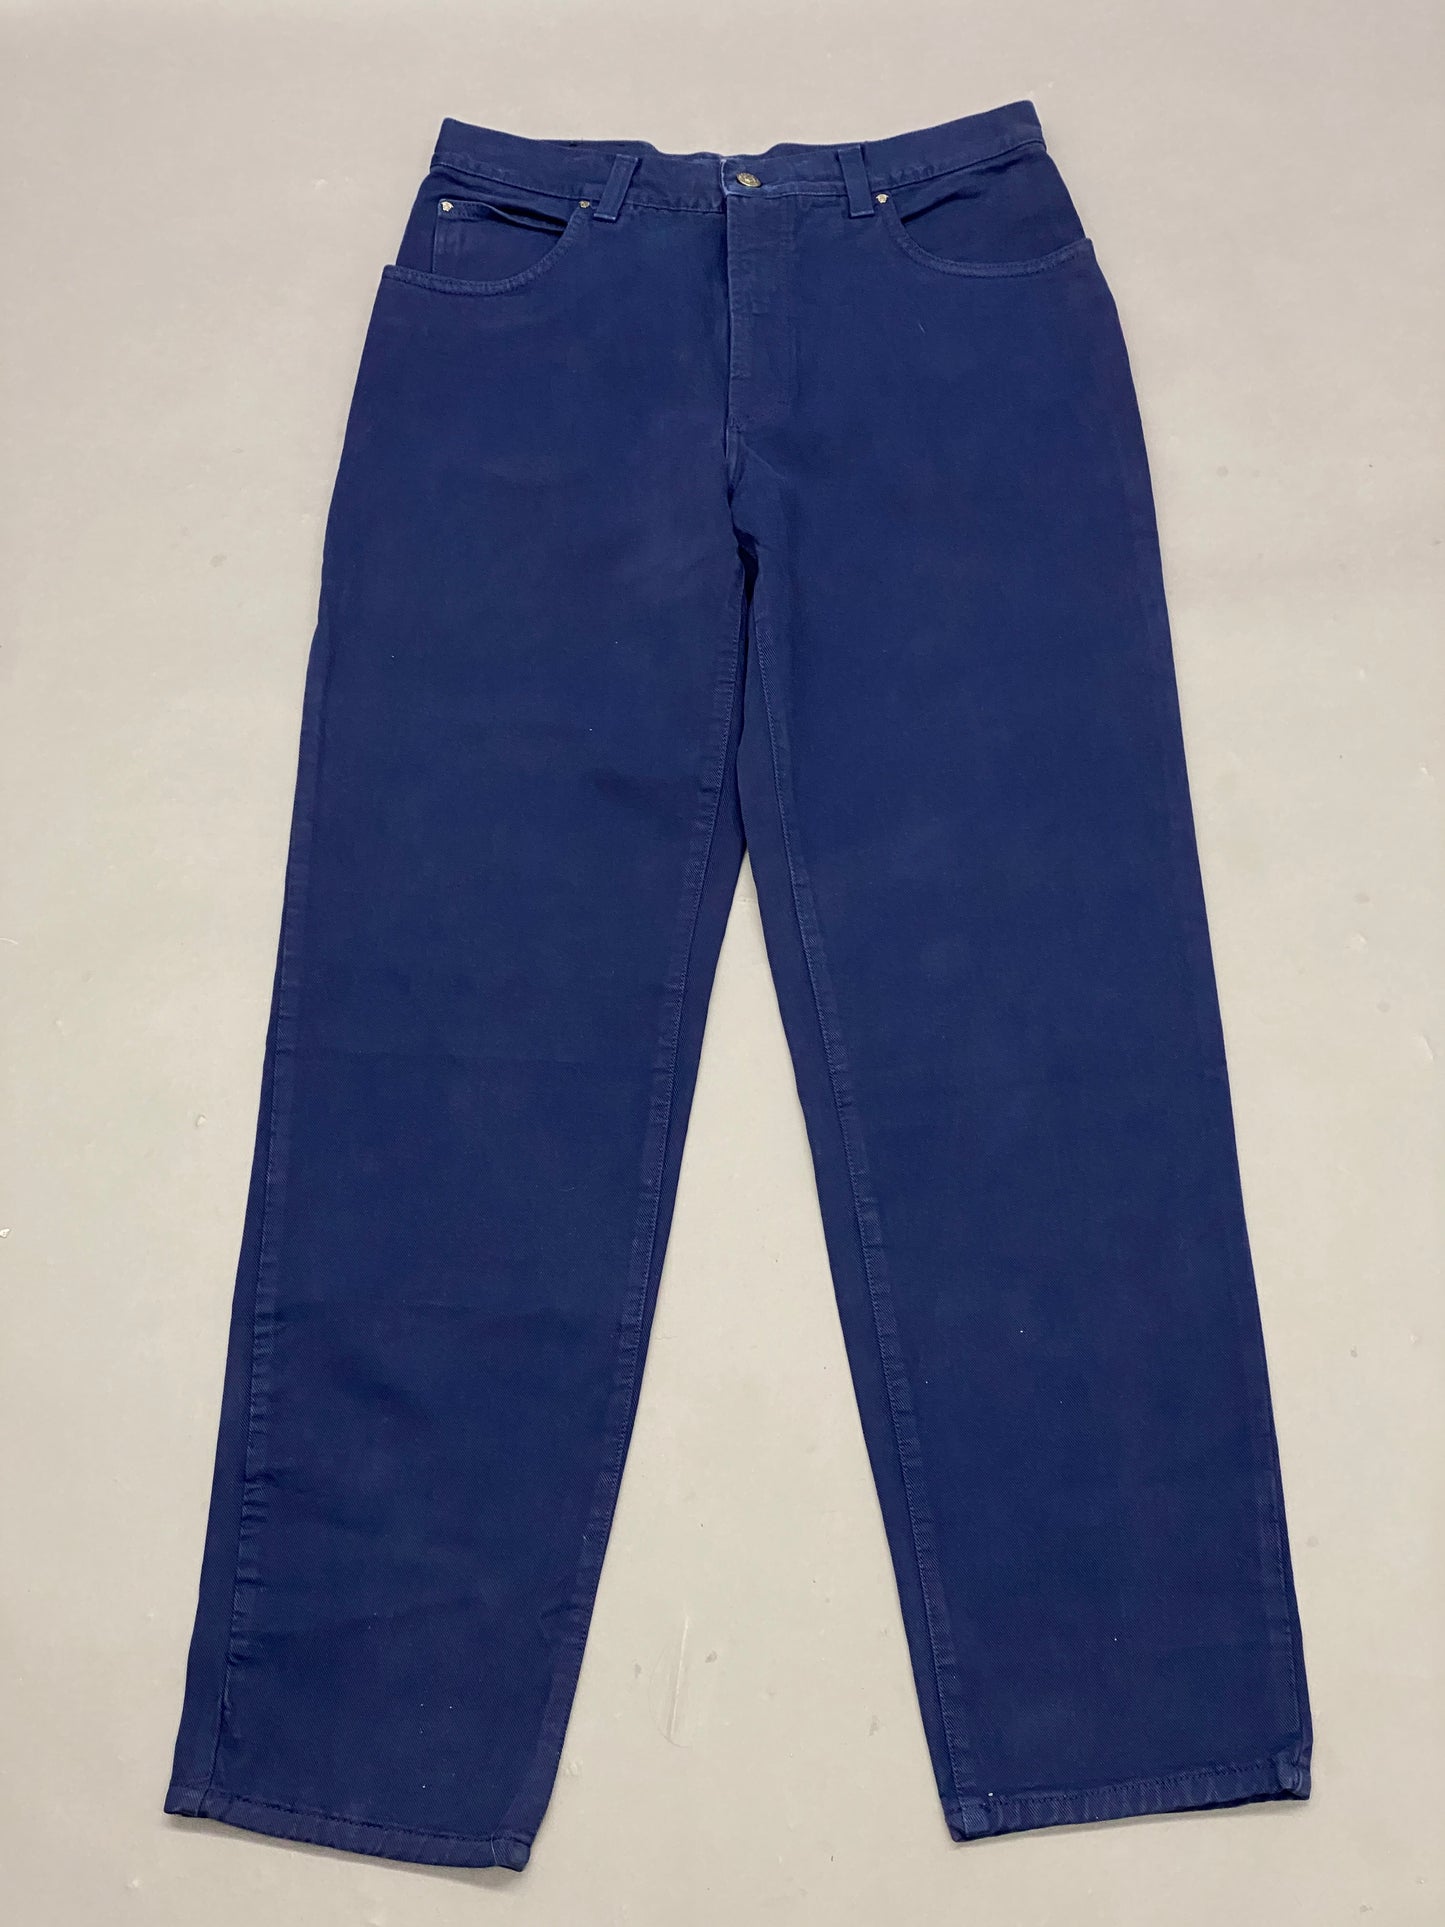 Versace Navy Vintage Jeans - 32